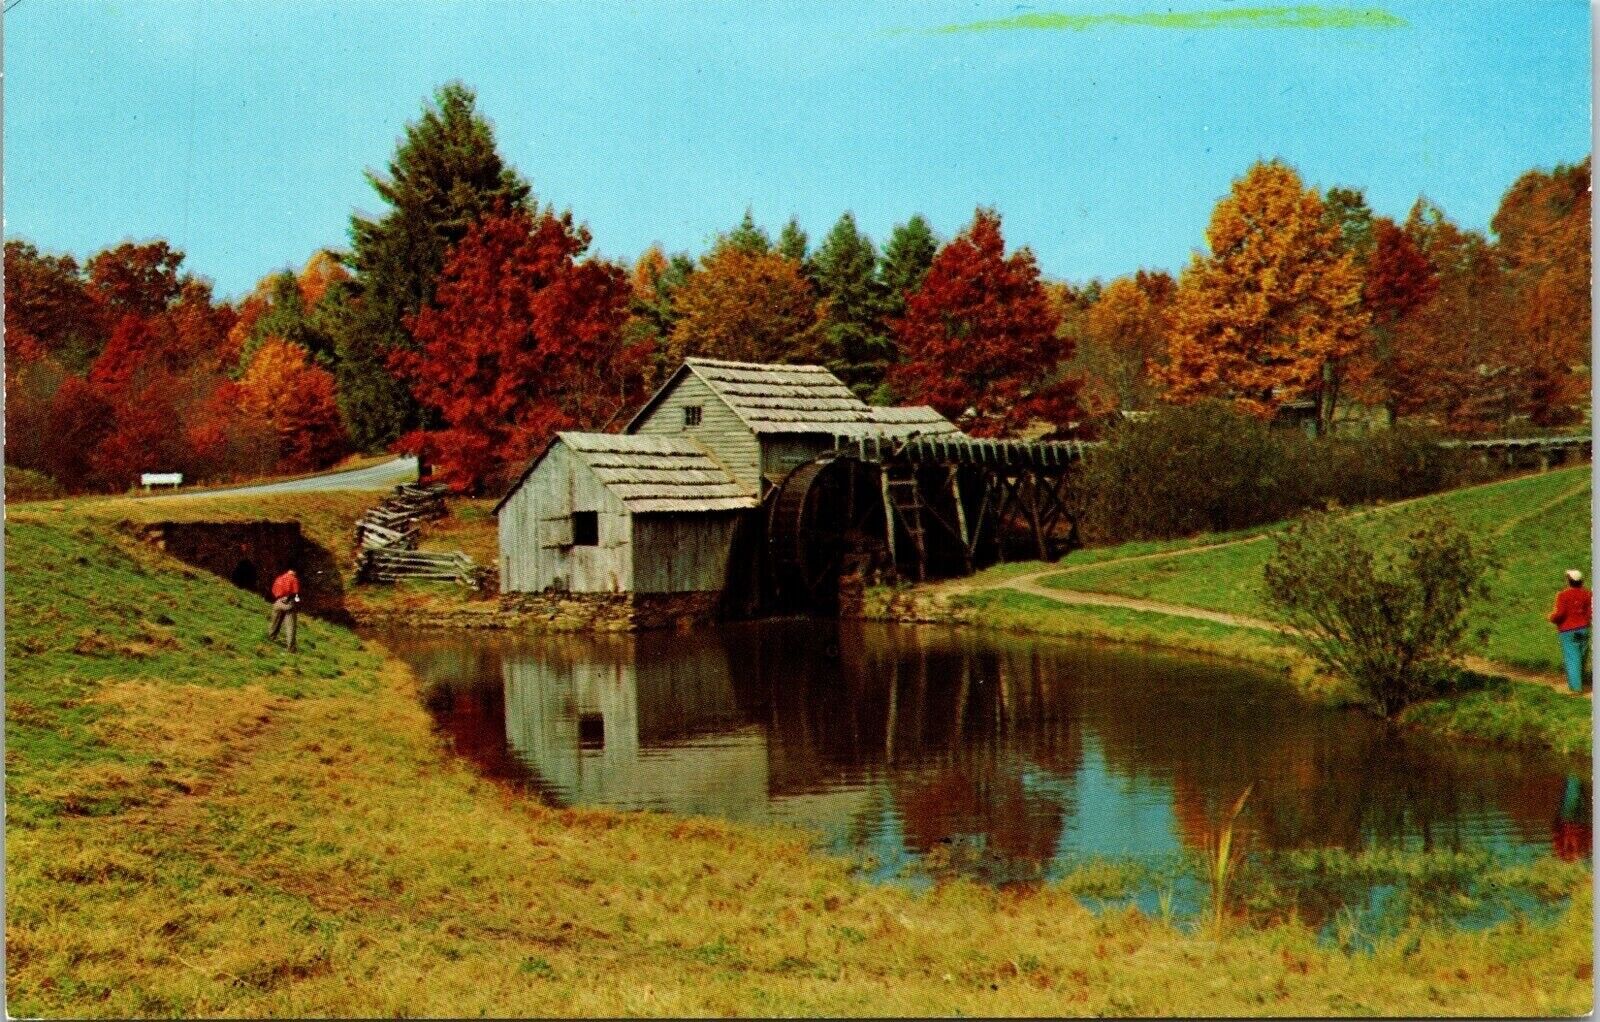 Historic Old Mill Pond Upstate New York Scenic Landscape Chrome Postcard